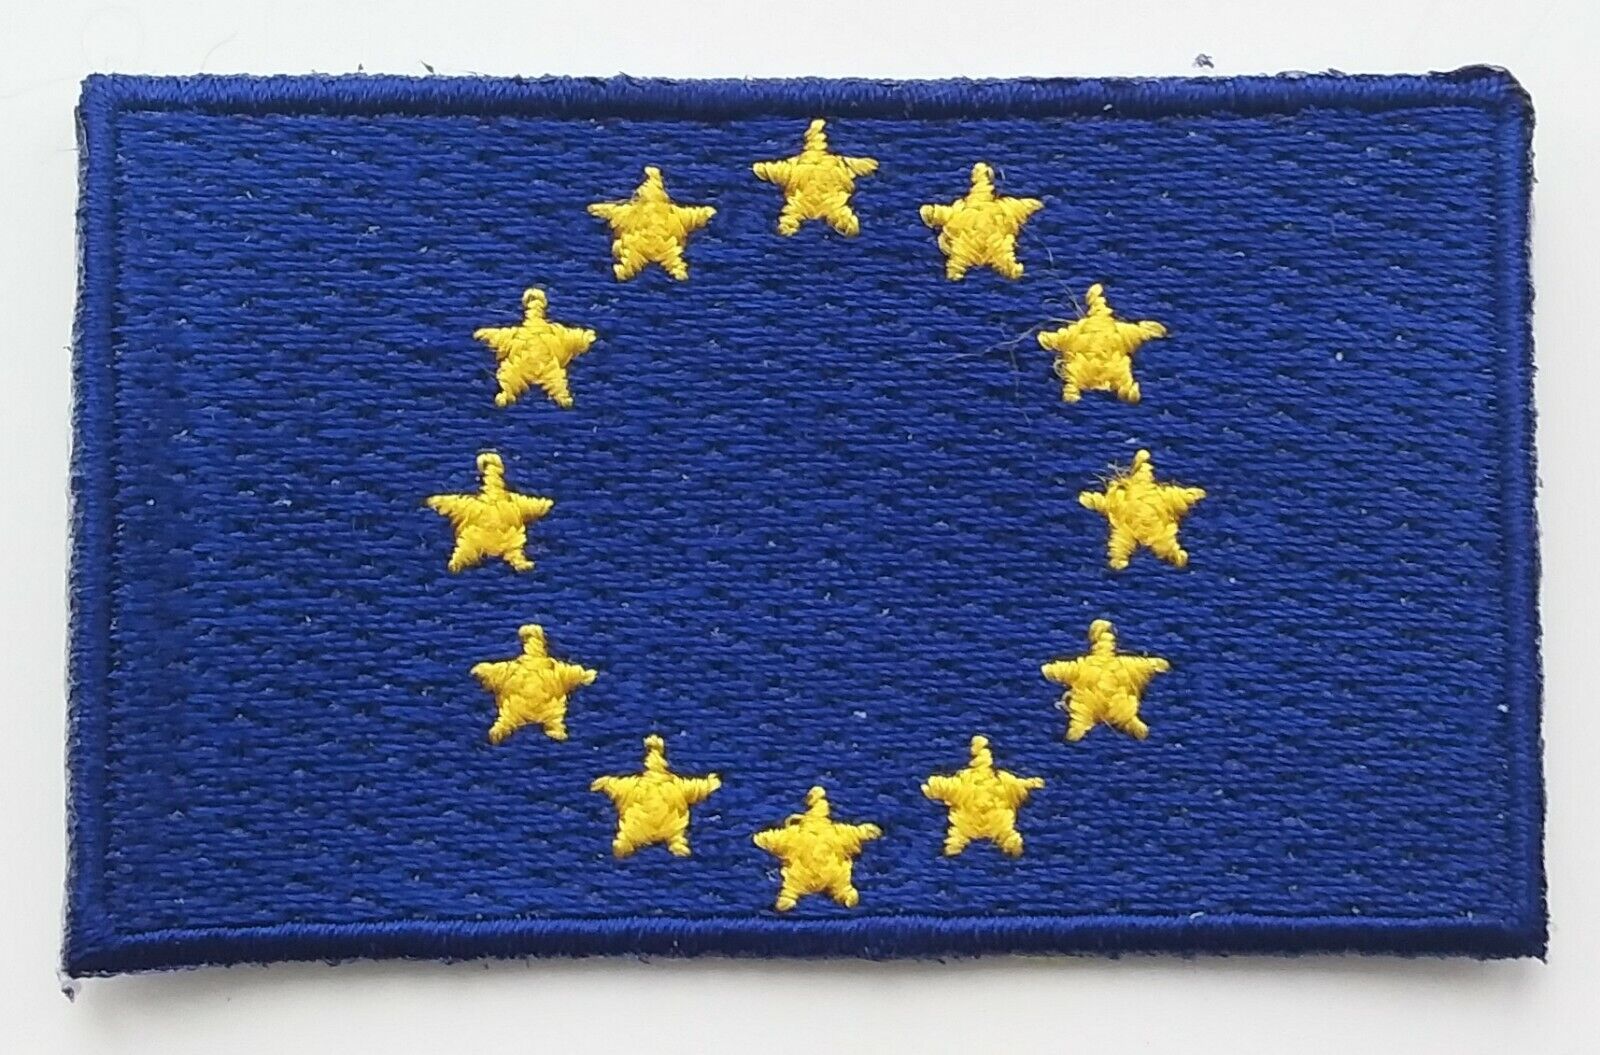 EUROPEAN UNION FLAG PATCH Embroidered Badge 3.8 x 6cm EU Européenne Europäische